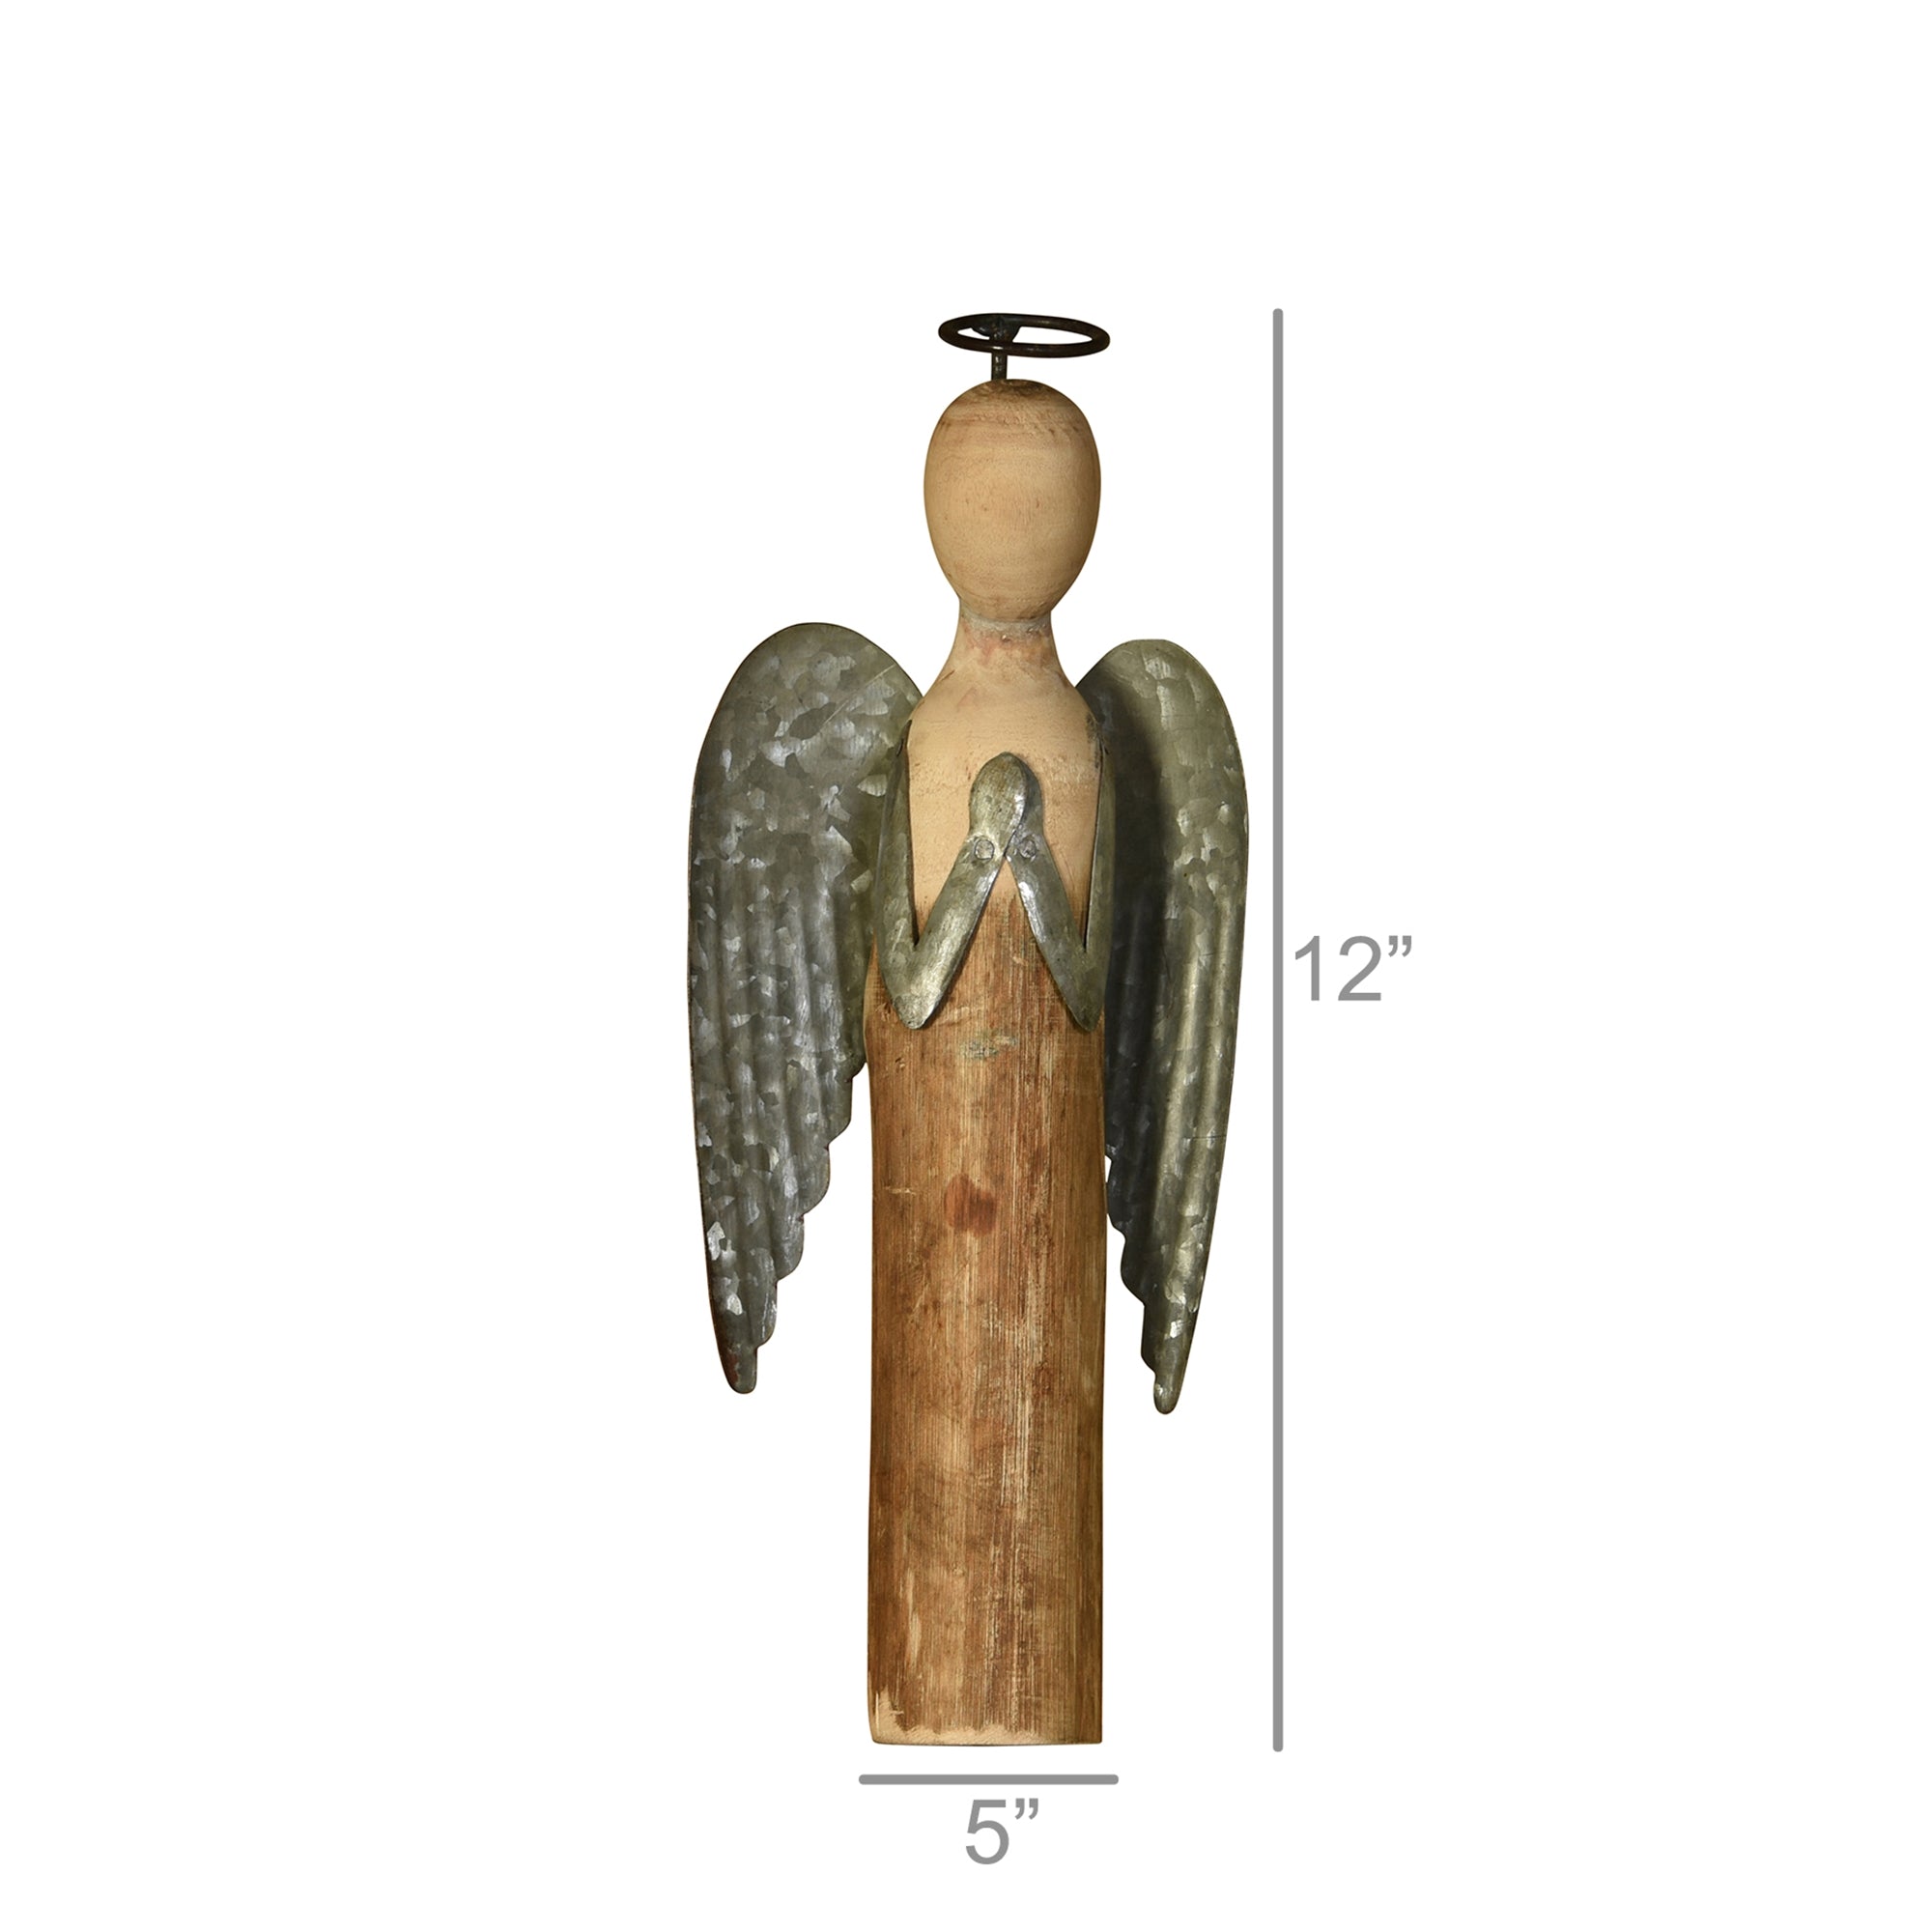 Angel at Prayer, Wood & Metal - Small Set Of 4 By HomArt